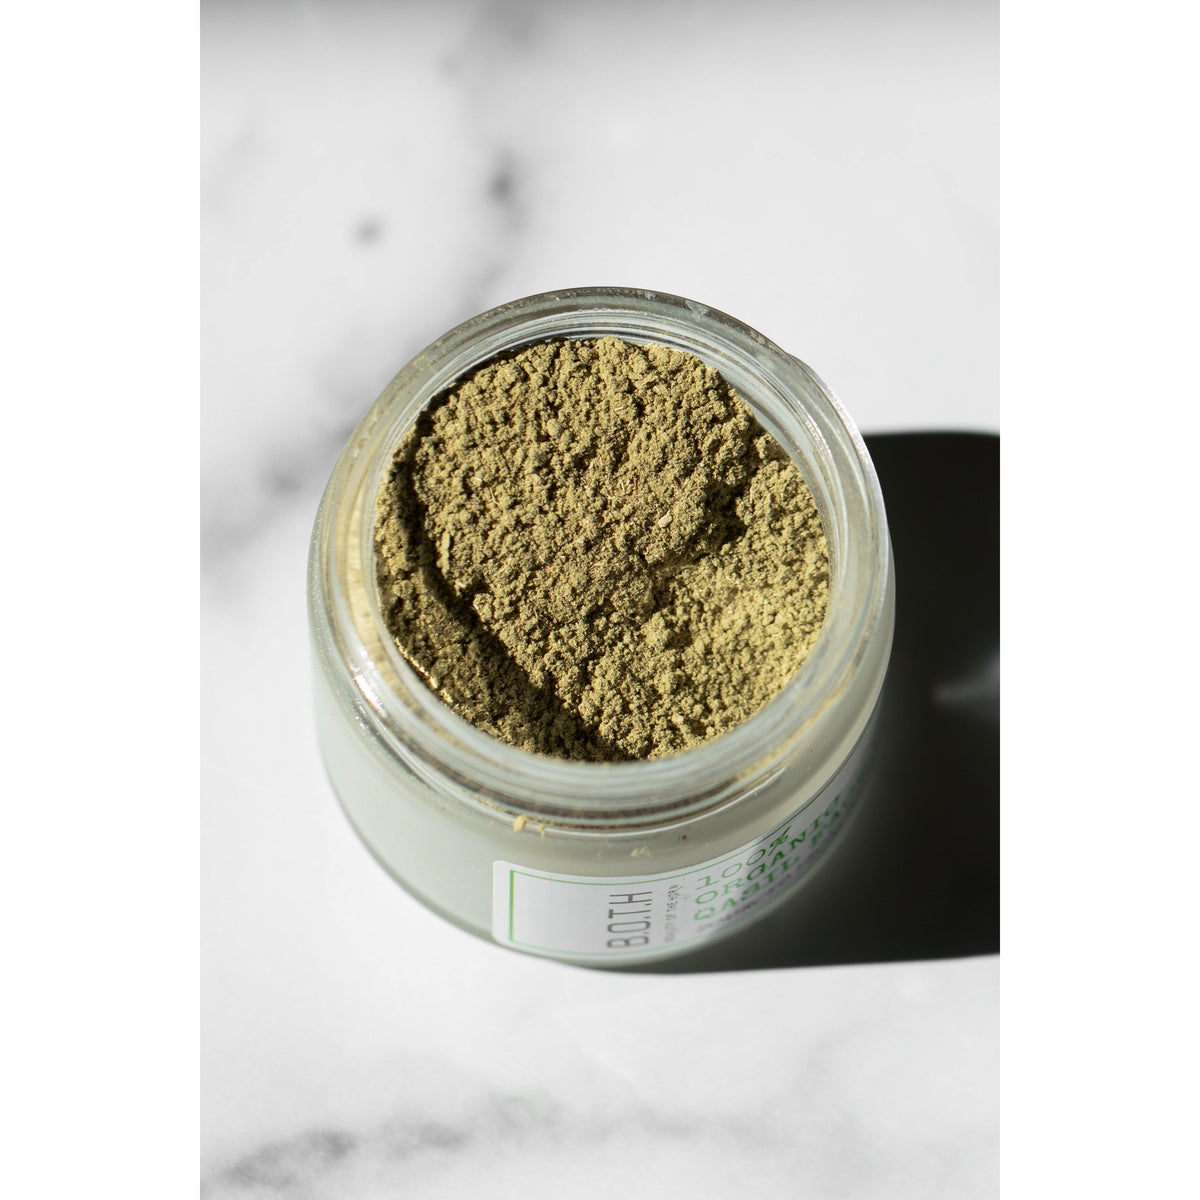 Qasil Powder Organic & Multi-purpose Skincare - 150g - Baki Beauty